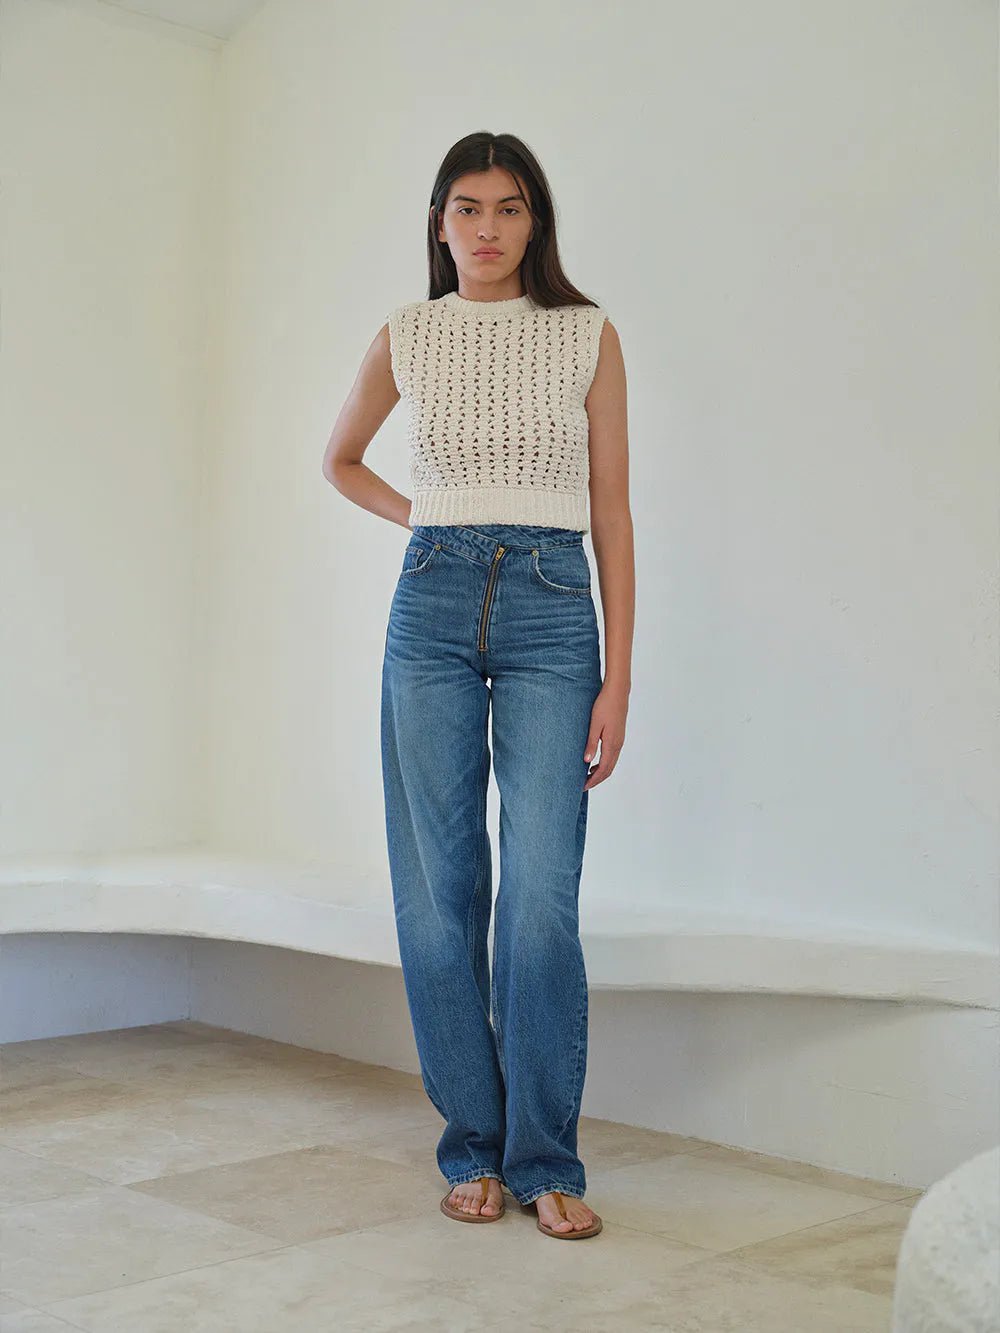 Frame Tape Yarn Sweater Vest in Cream - Estilo Boutique